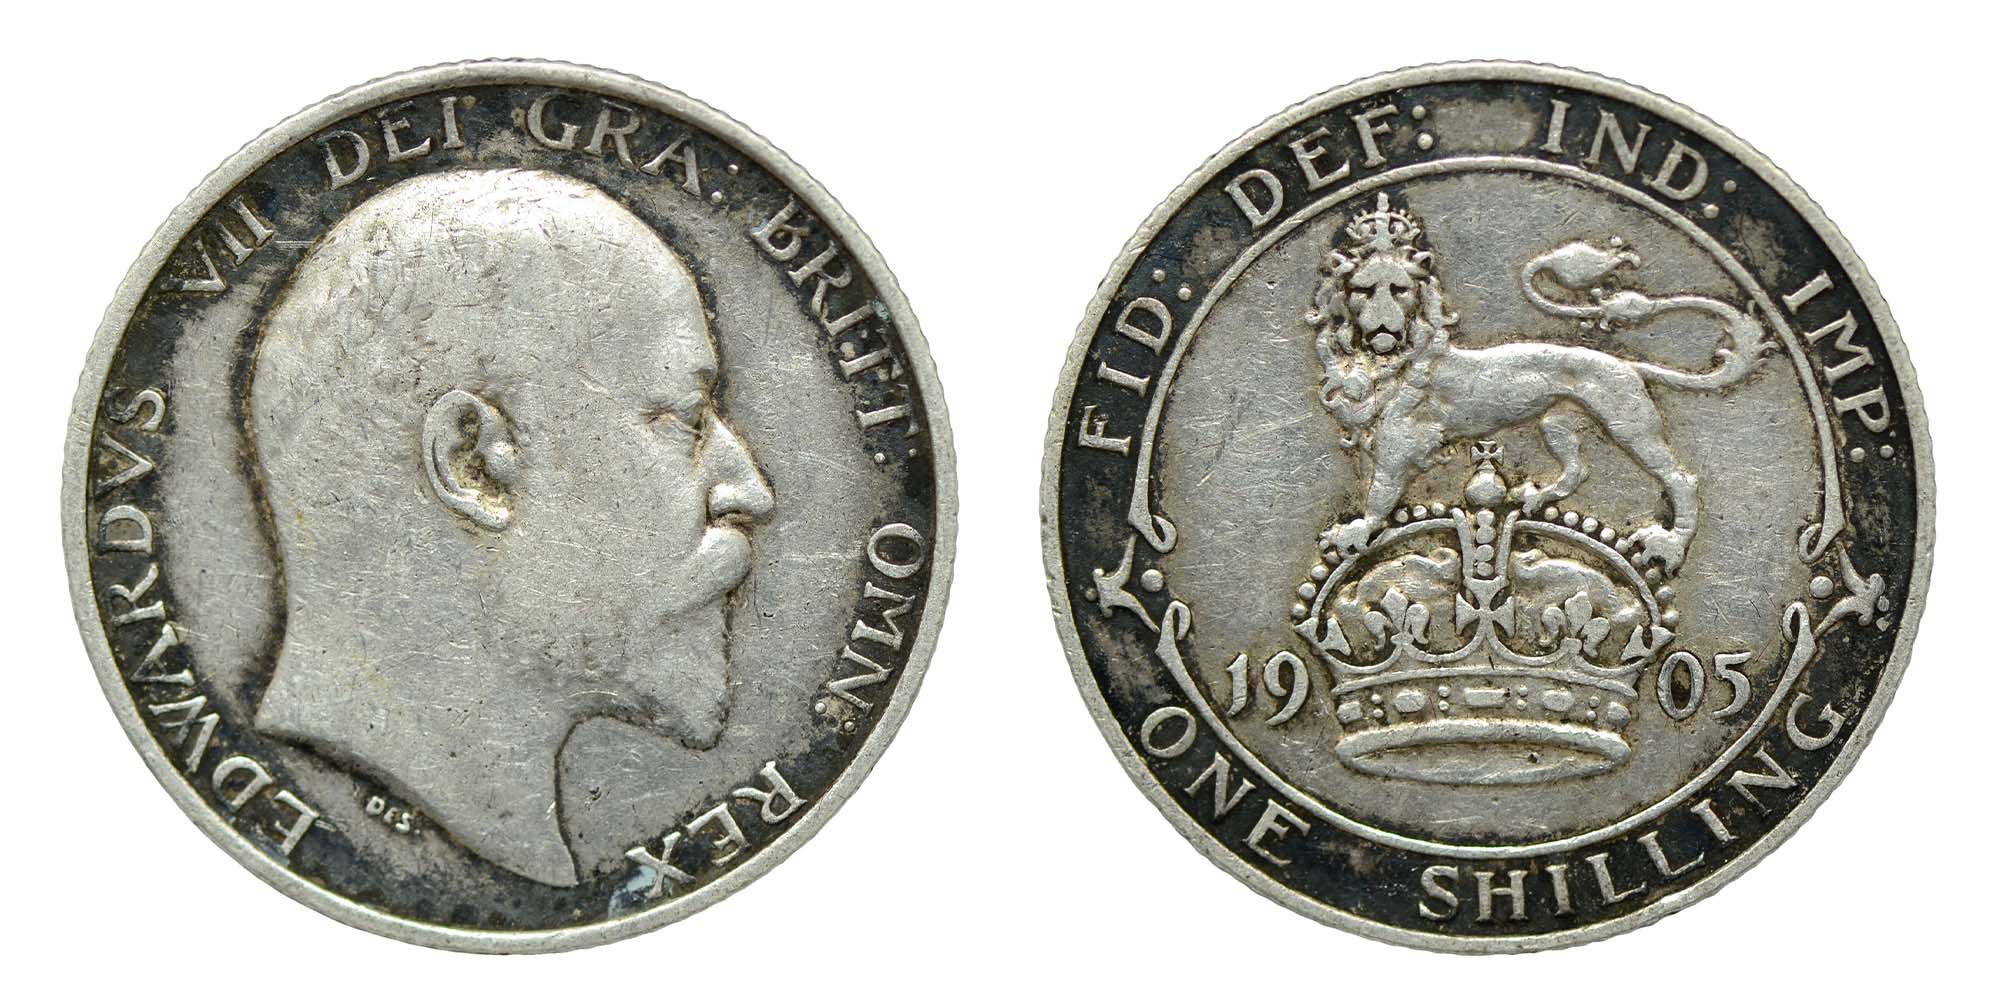 Edward VII Silver Shilling 1905 Bull R2 - very rare